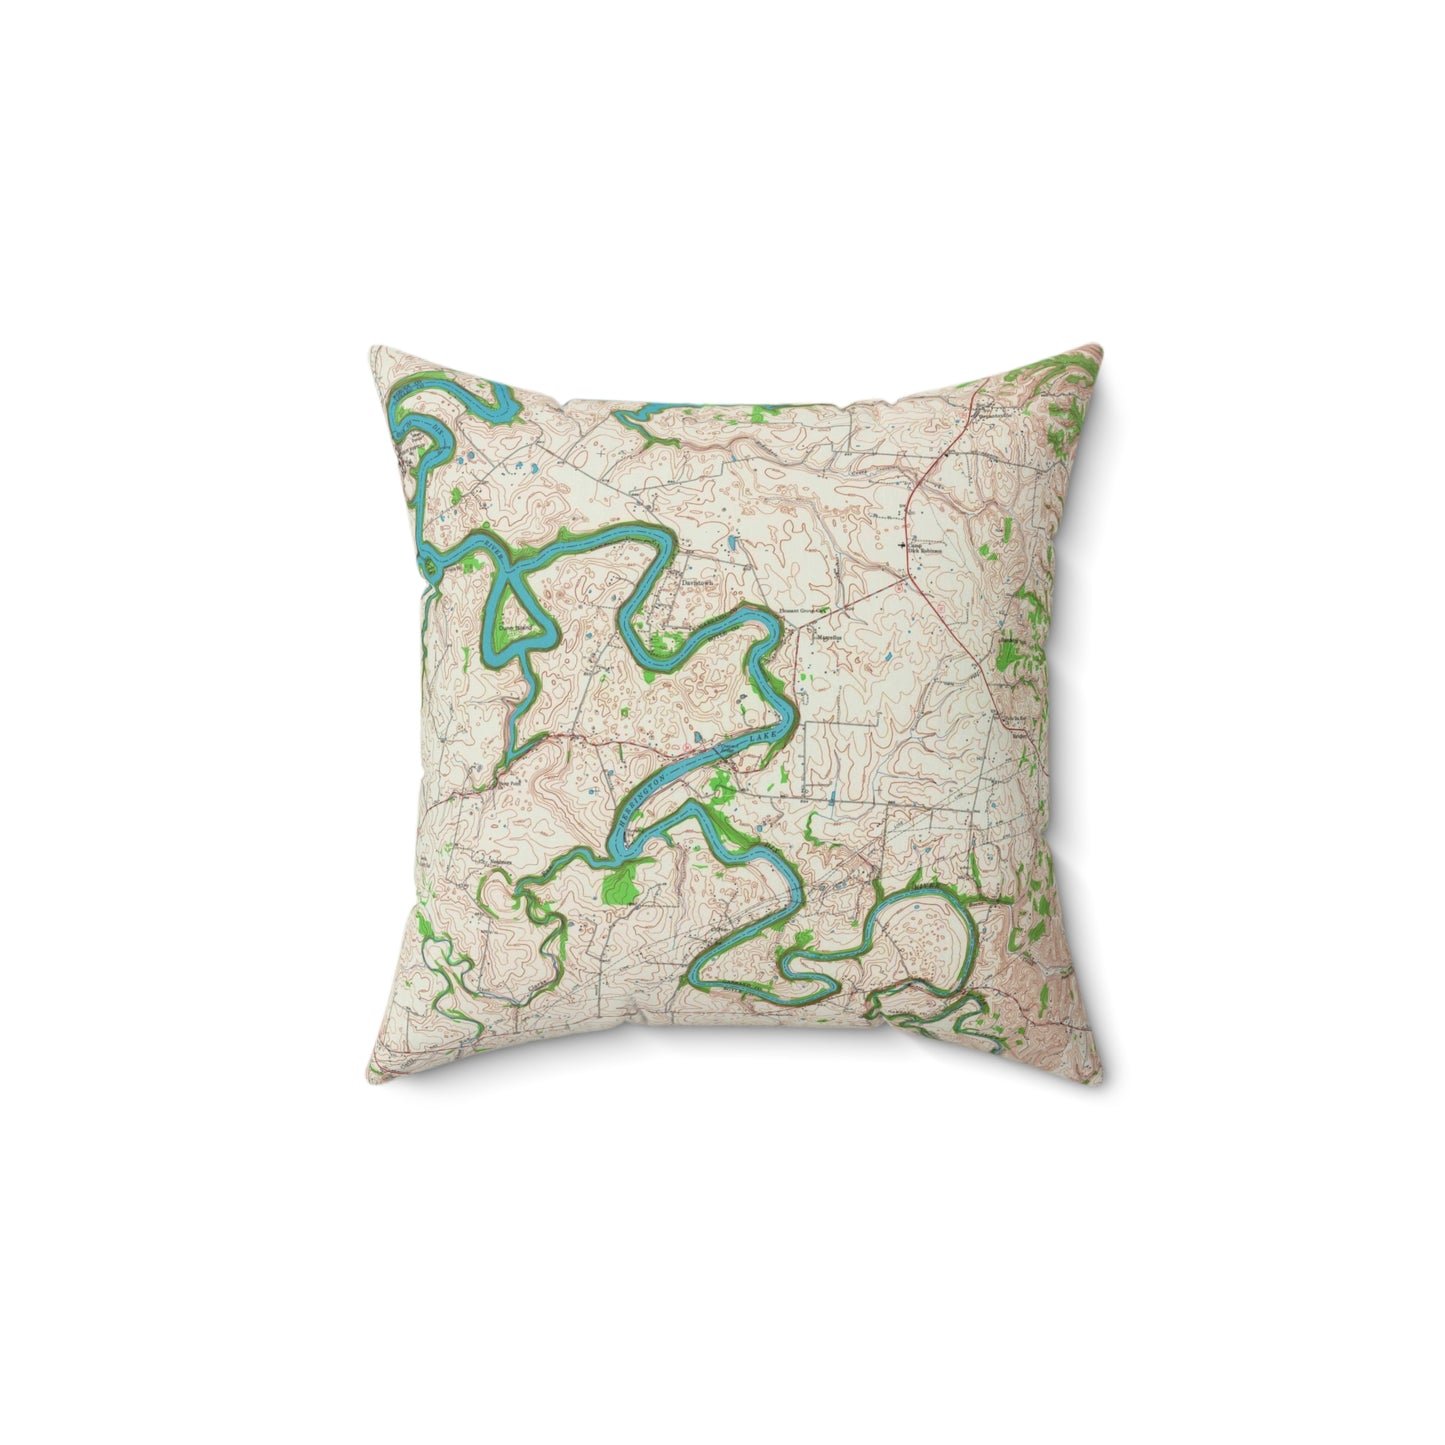 Herrington Lake Bryantsville Quadrangle USGS Topography Map Spun Polyester Square Accent Pillow